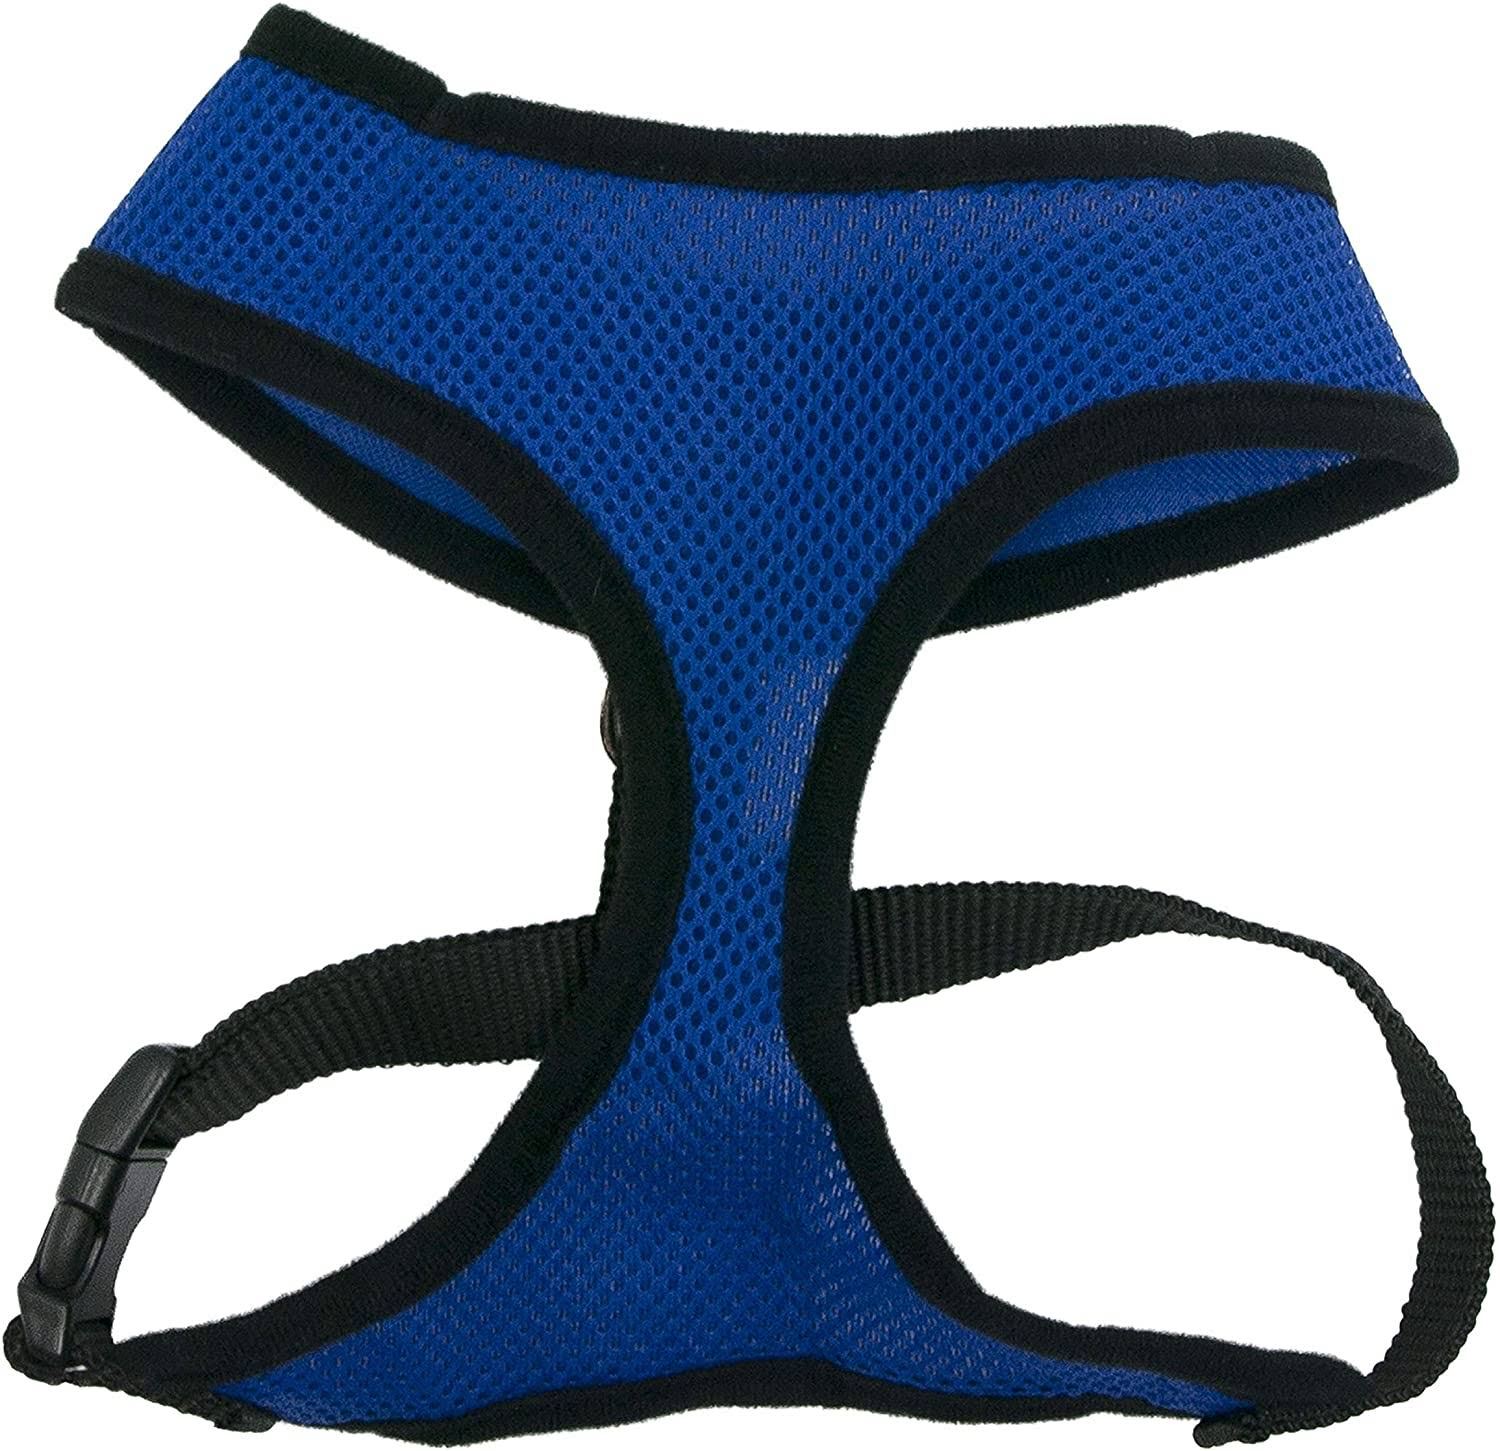 Four Paws Comfort Control Dog Harness - Blue, Medium